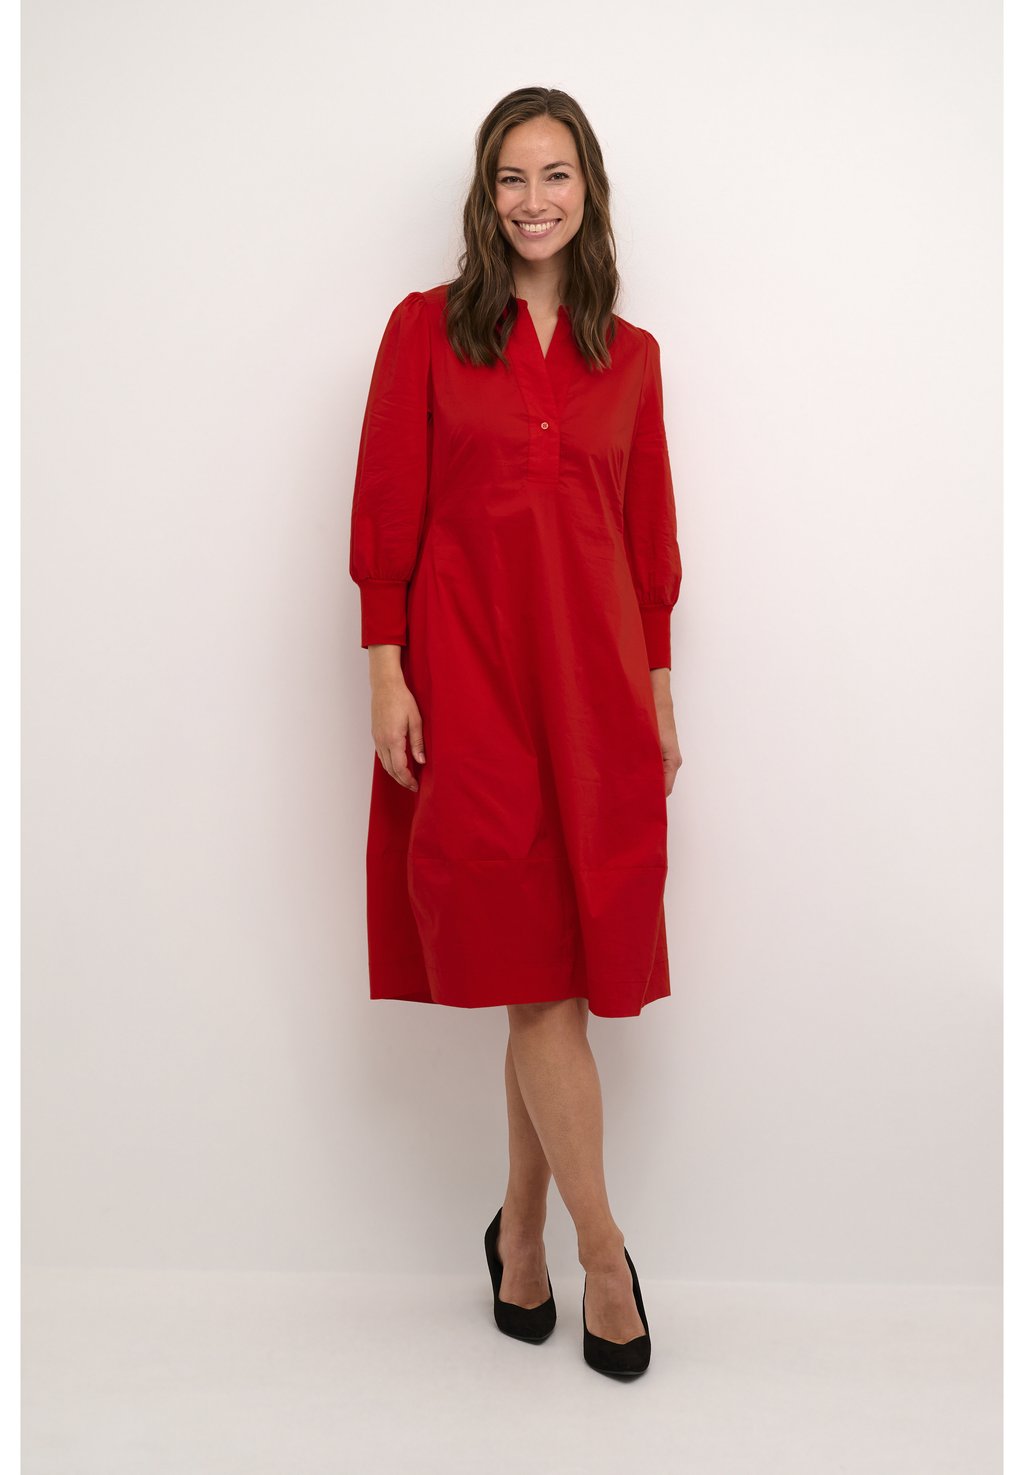 Дневное платье CUANTOINETT 3/4 SLEEVE Culture, цвет fiery red